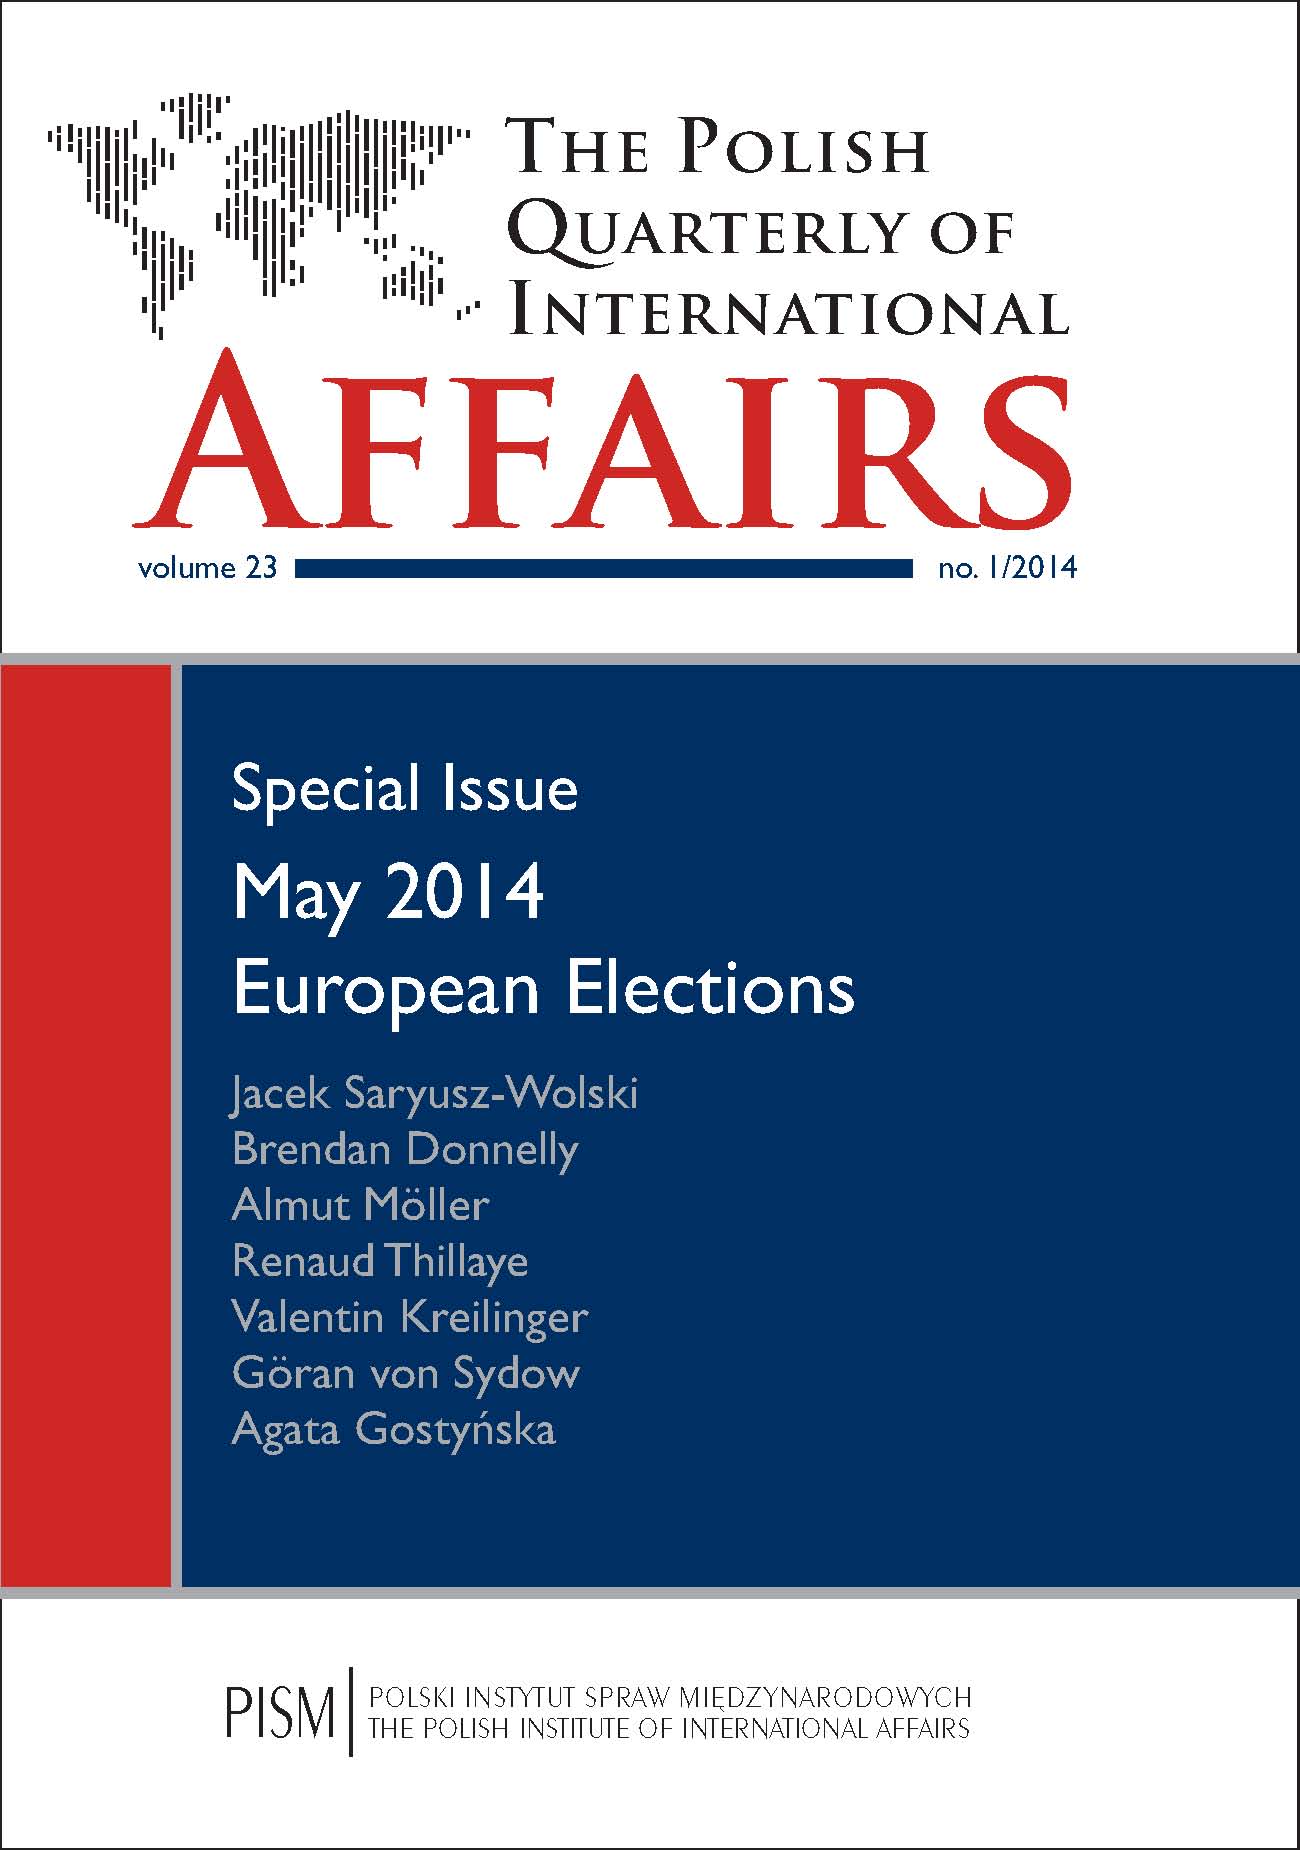 The Polish Quarterly of International Affairs